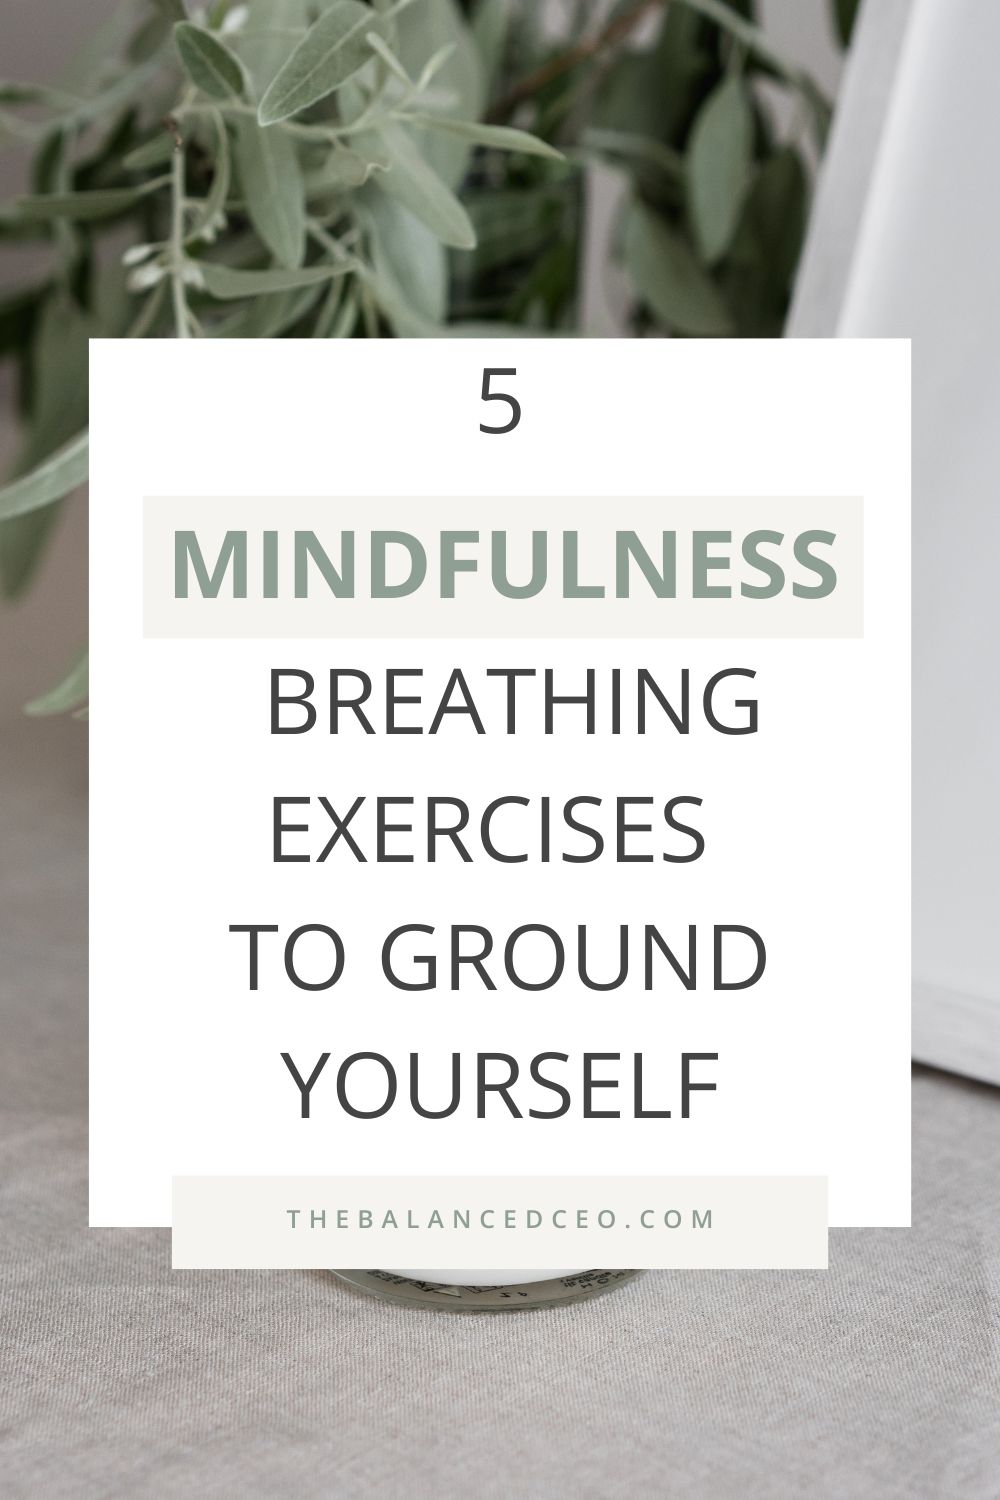 5 Mindfulness Breathing Exercises to Ground Yourself